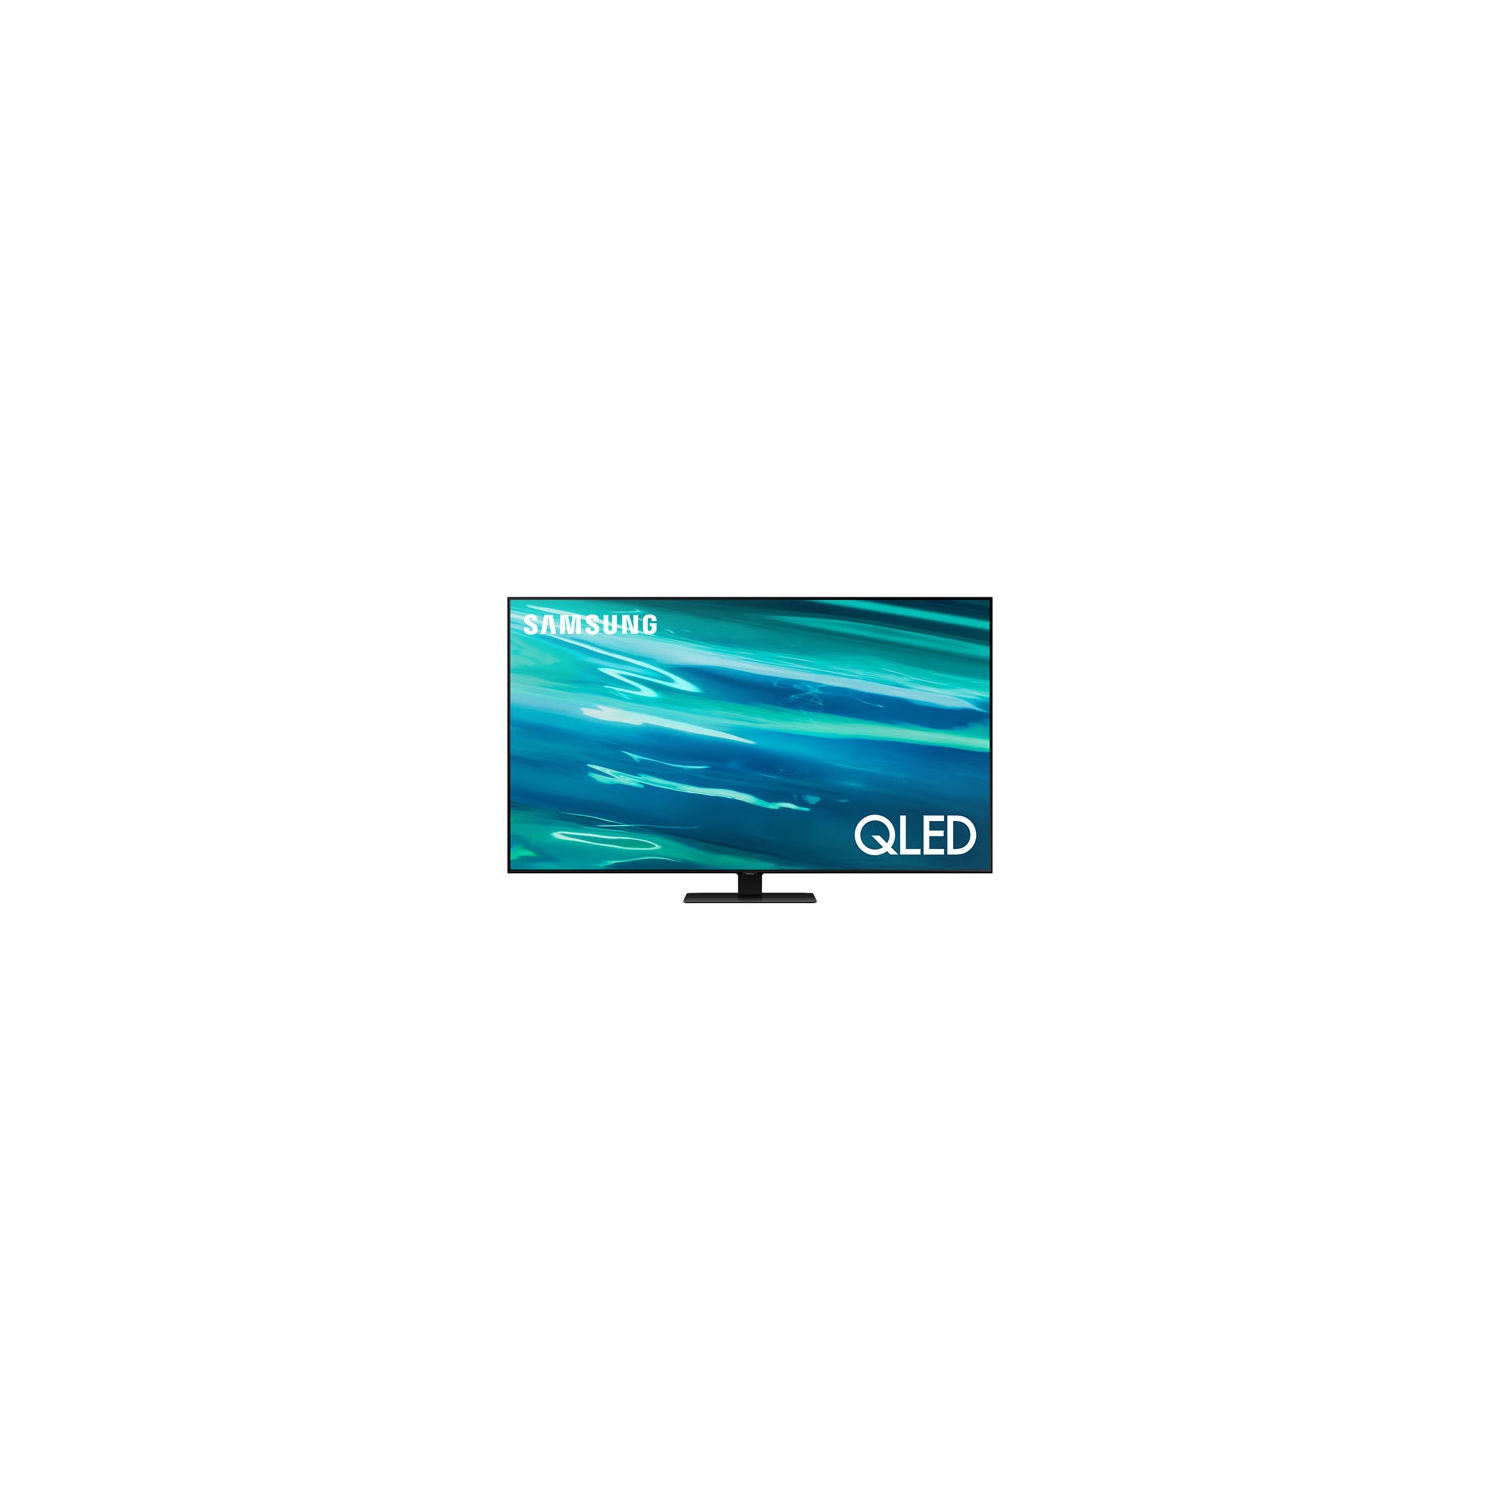 Refurbished (Good) - SAMSUNG QN55Q80A 55" QLED 4K HDR FULL ARRAY 120HZ SMART TV (2021)